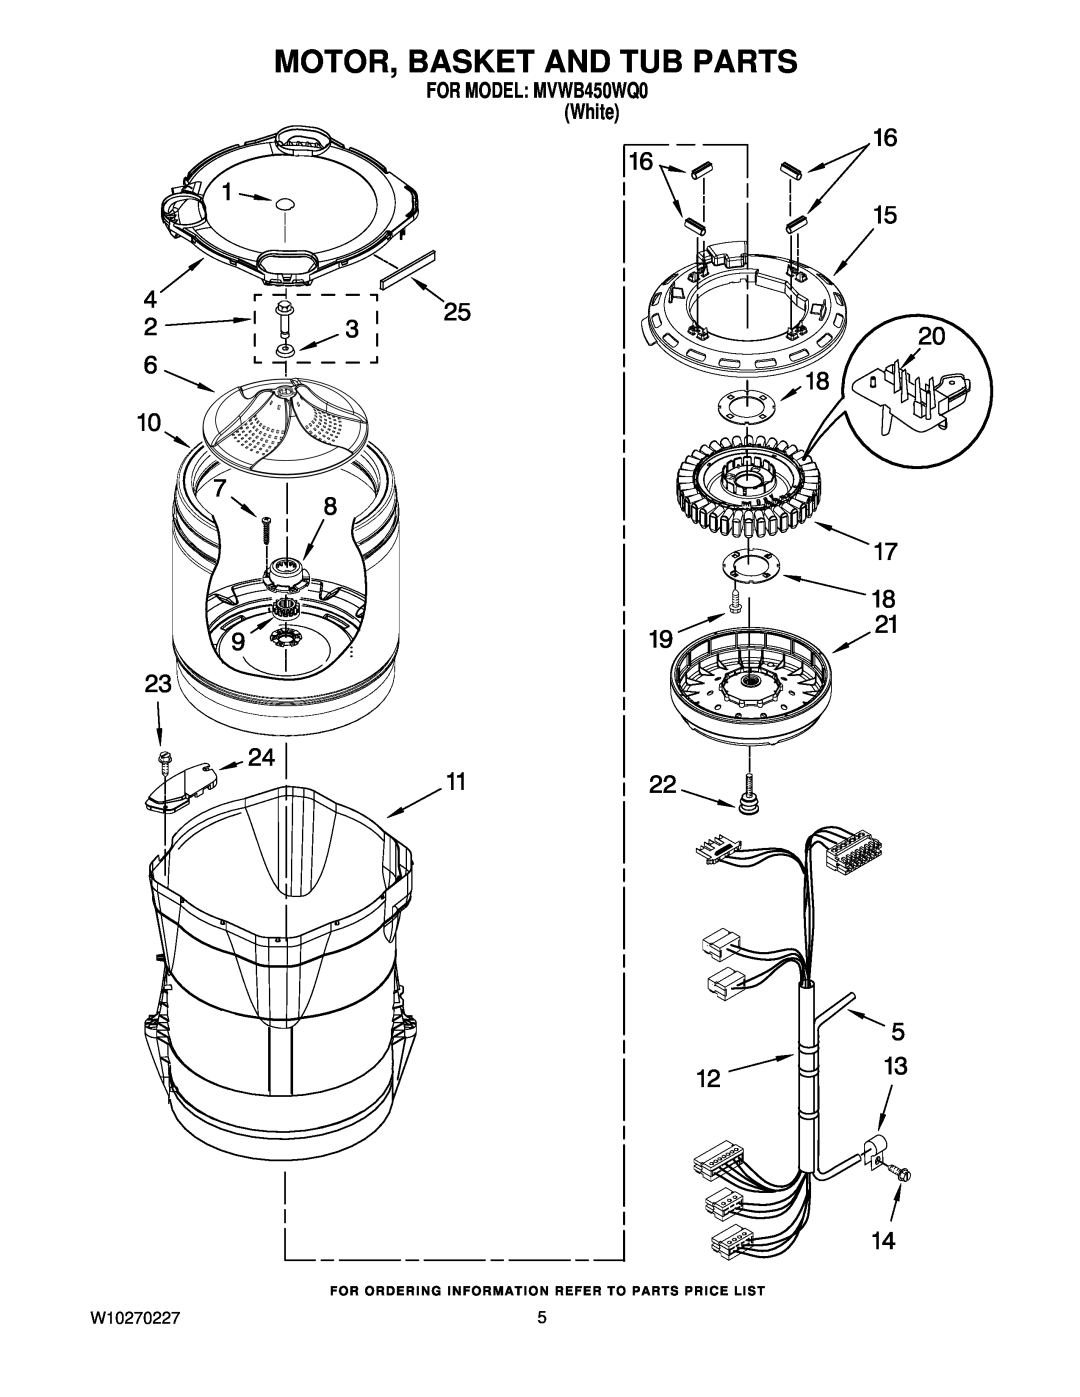 Maytag manual Motor, Basket And Tub Parts, W10270227, FOR MODEL MVWB450WQ0 White 